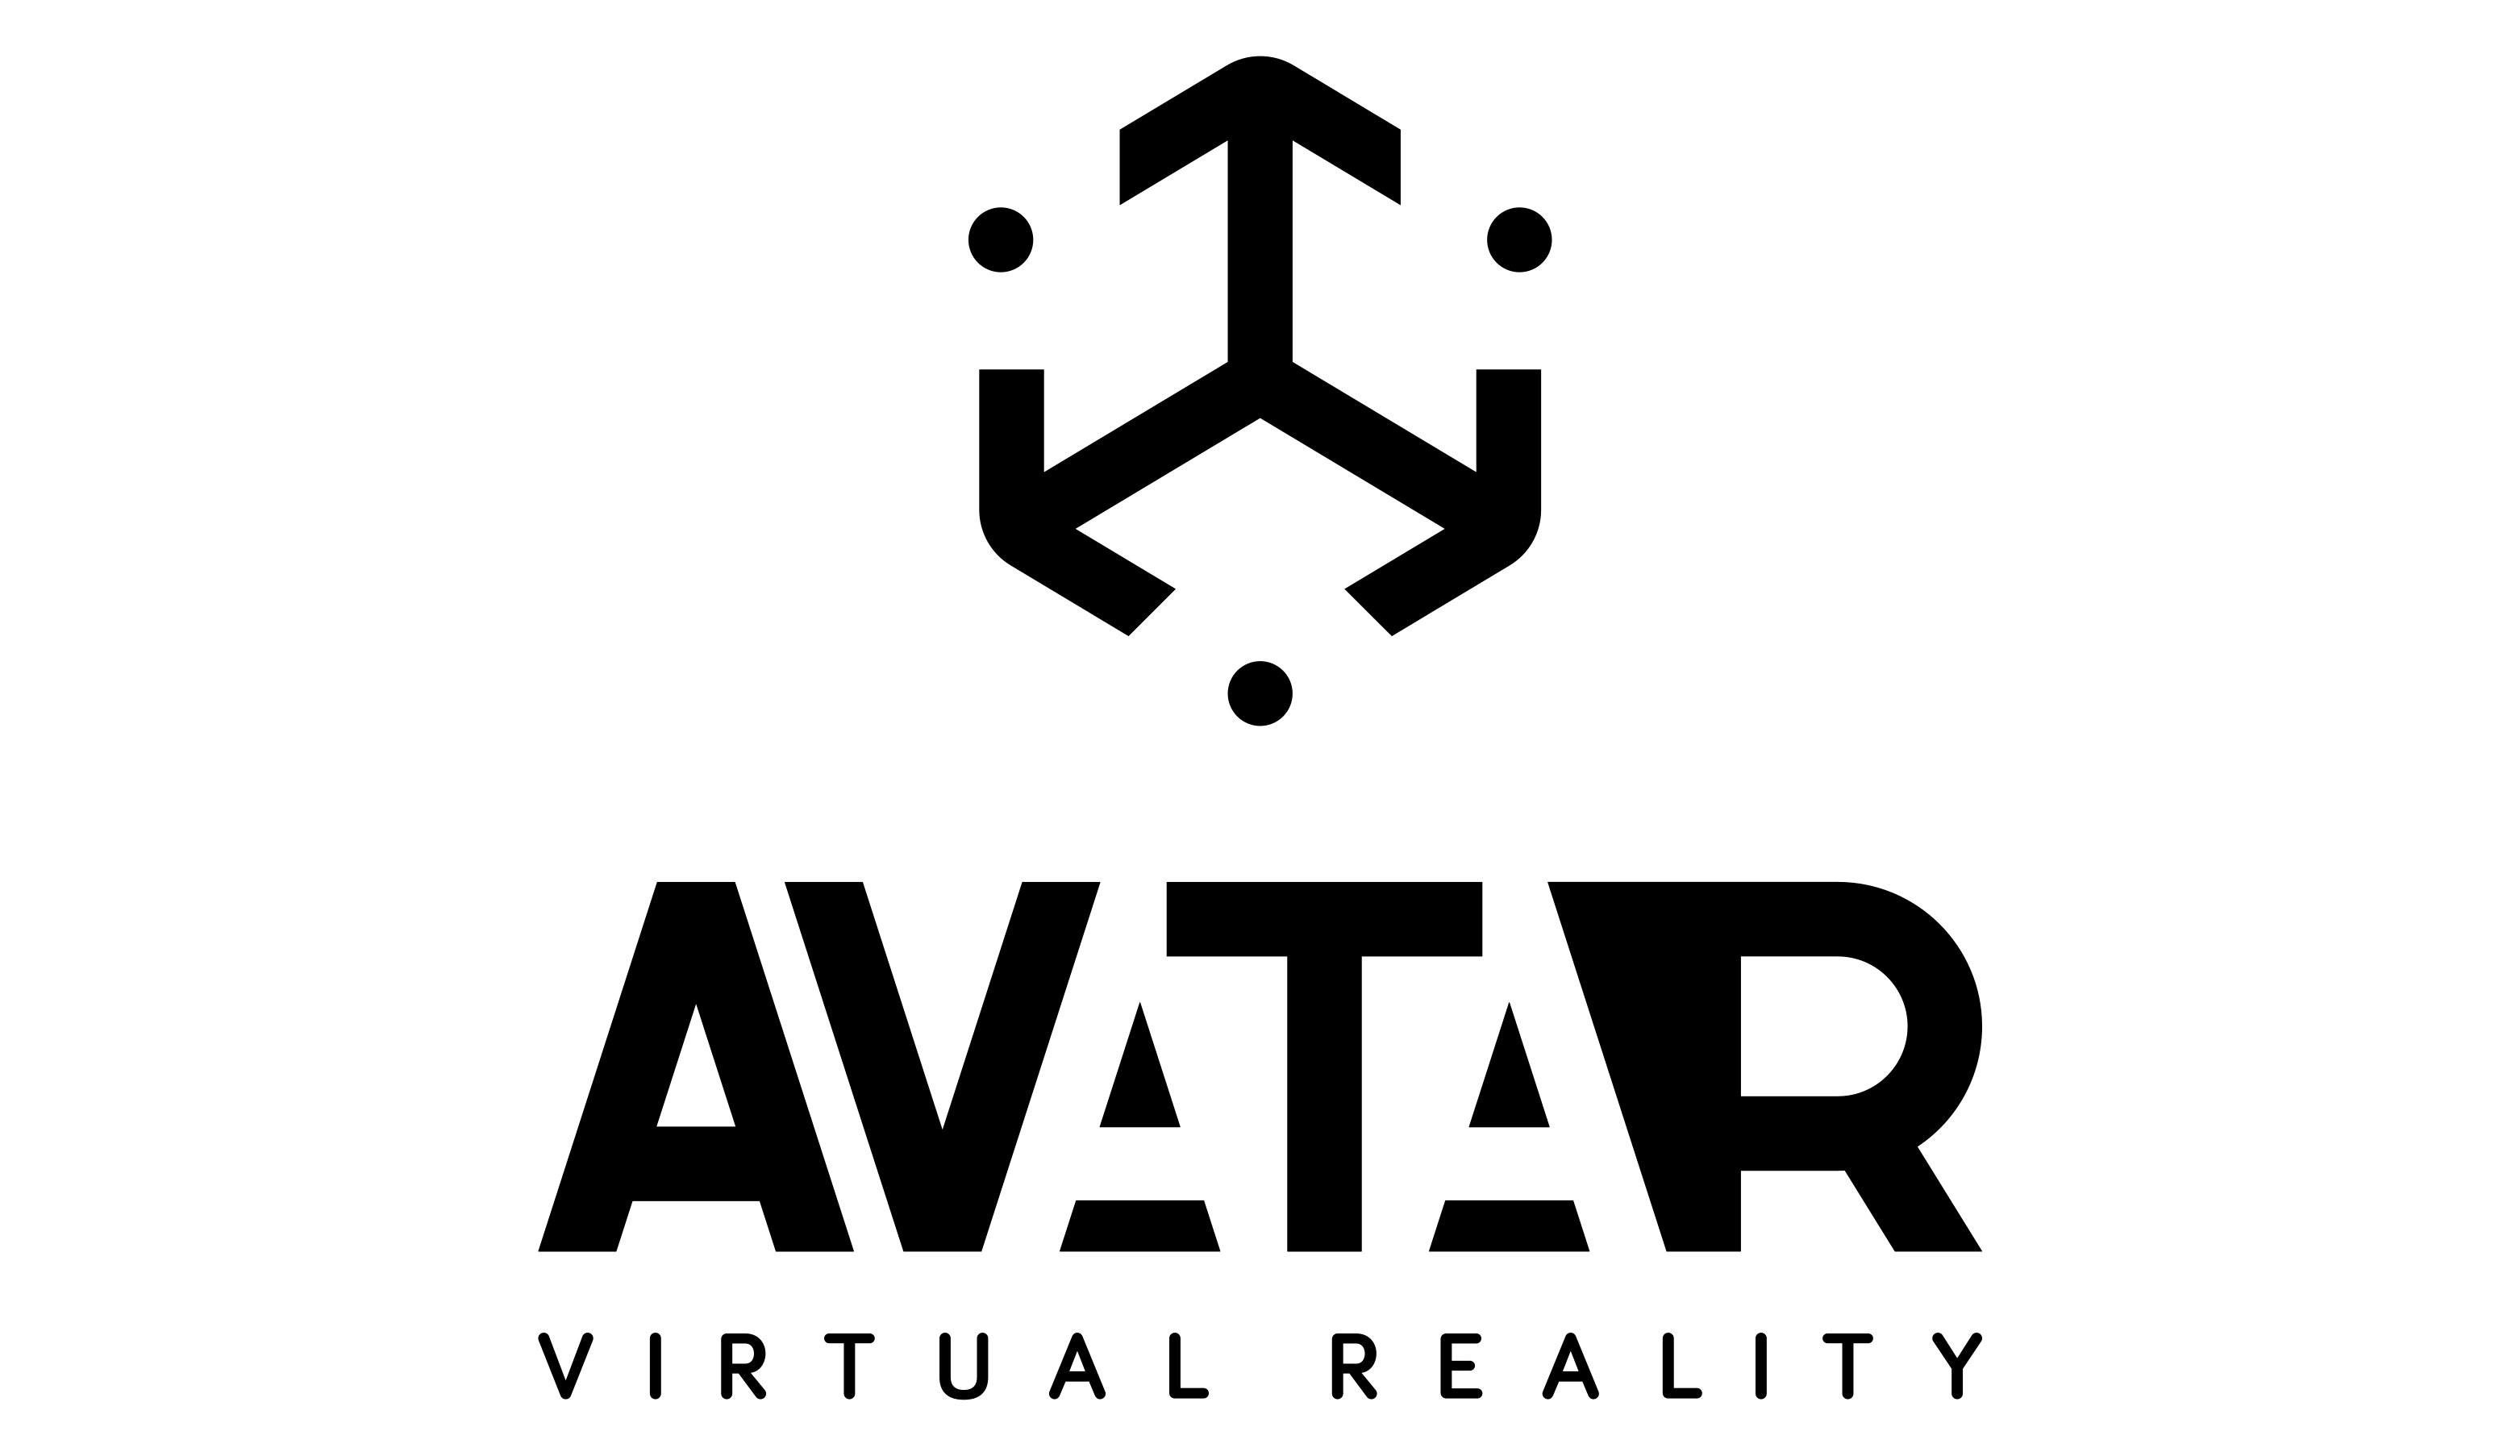 Avatar Virtual Reality